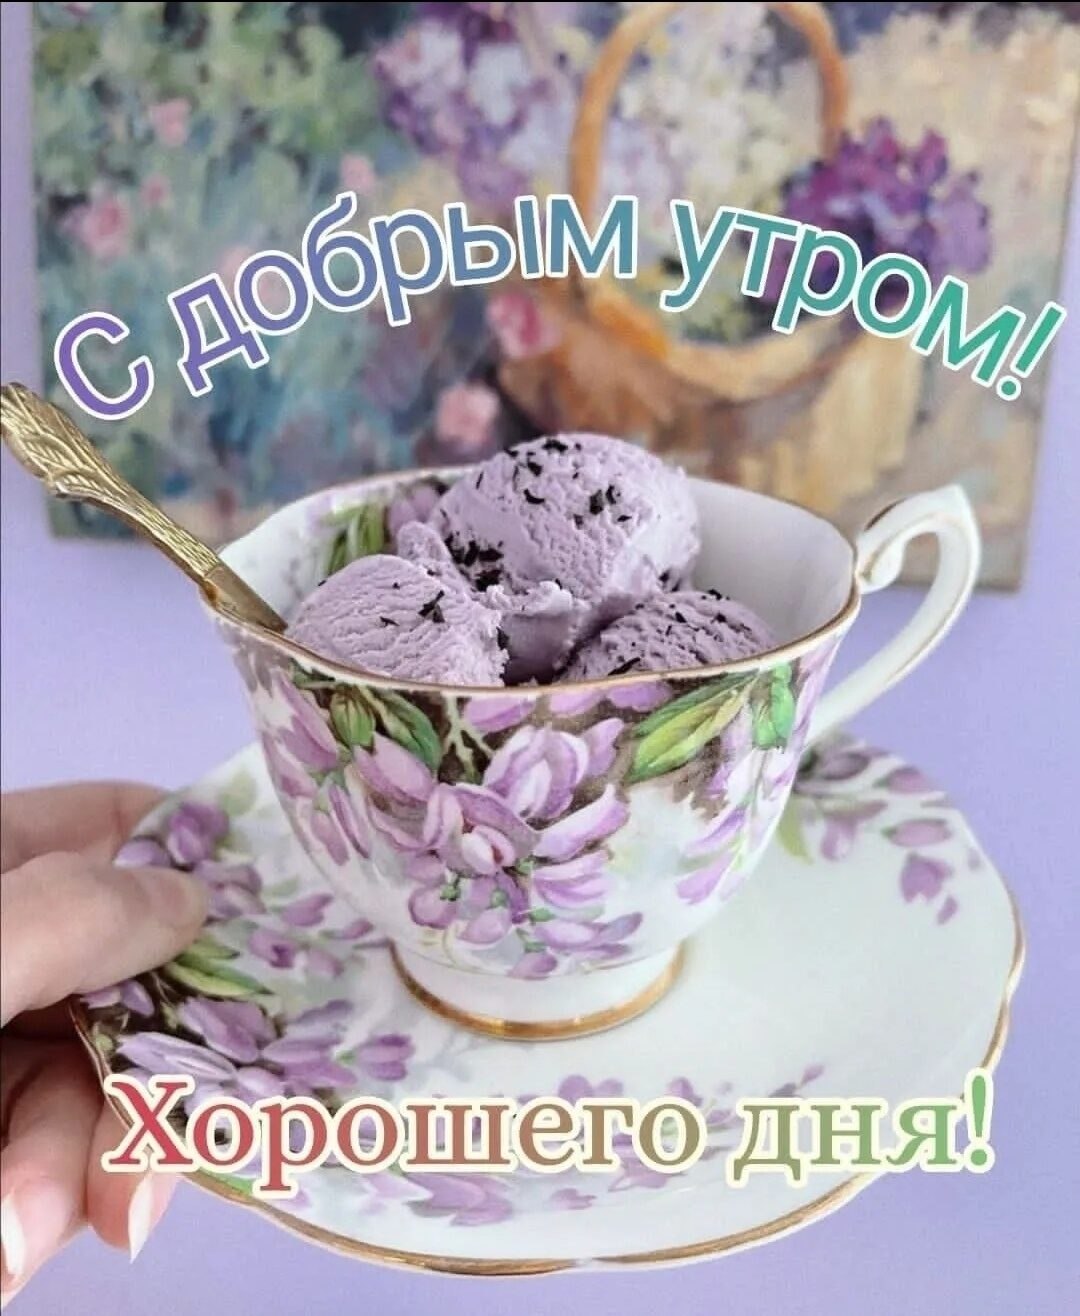 ***Victoria Viktorovna*** - 13  2023  03:20